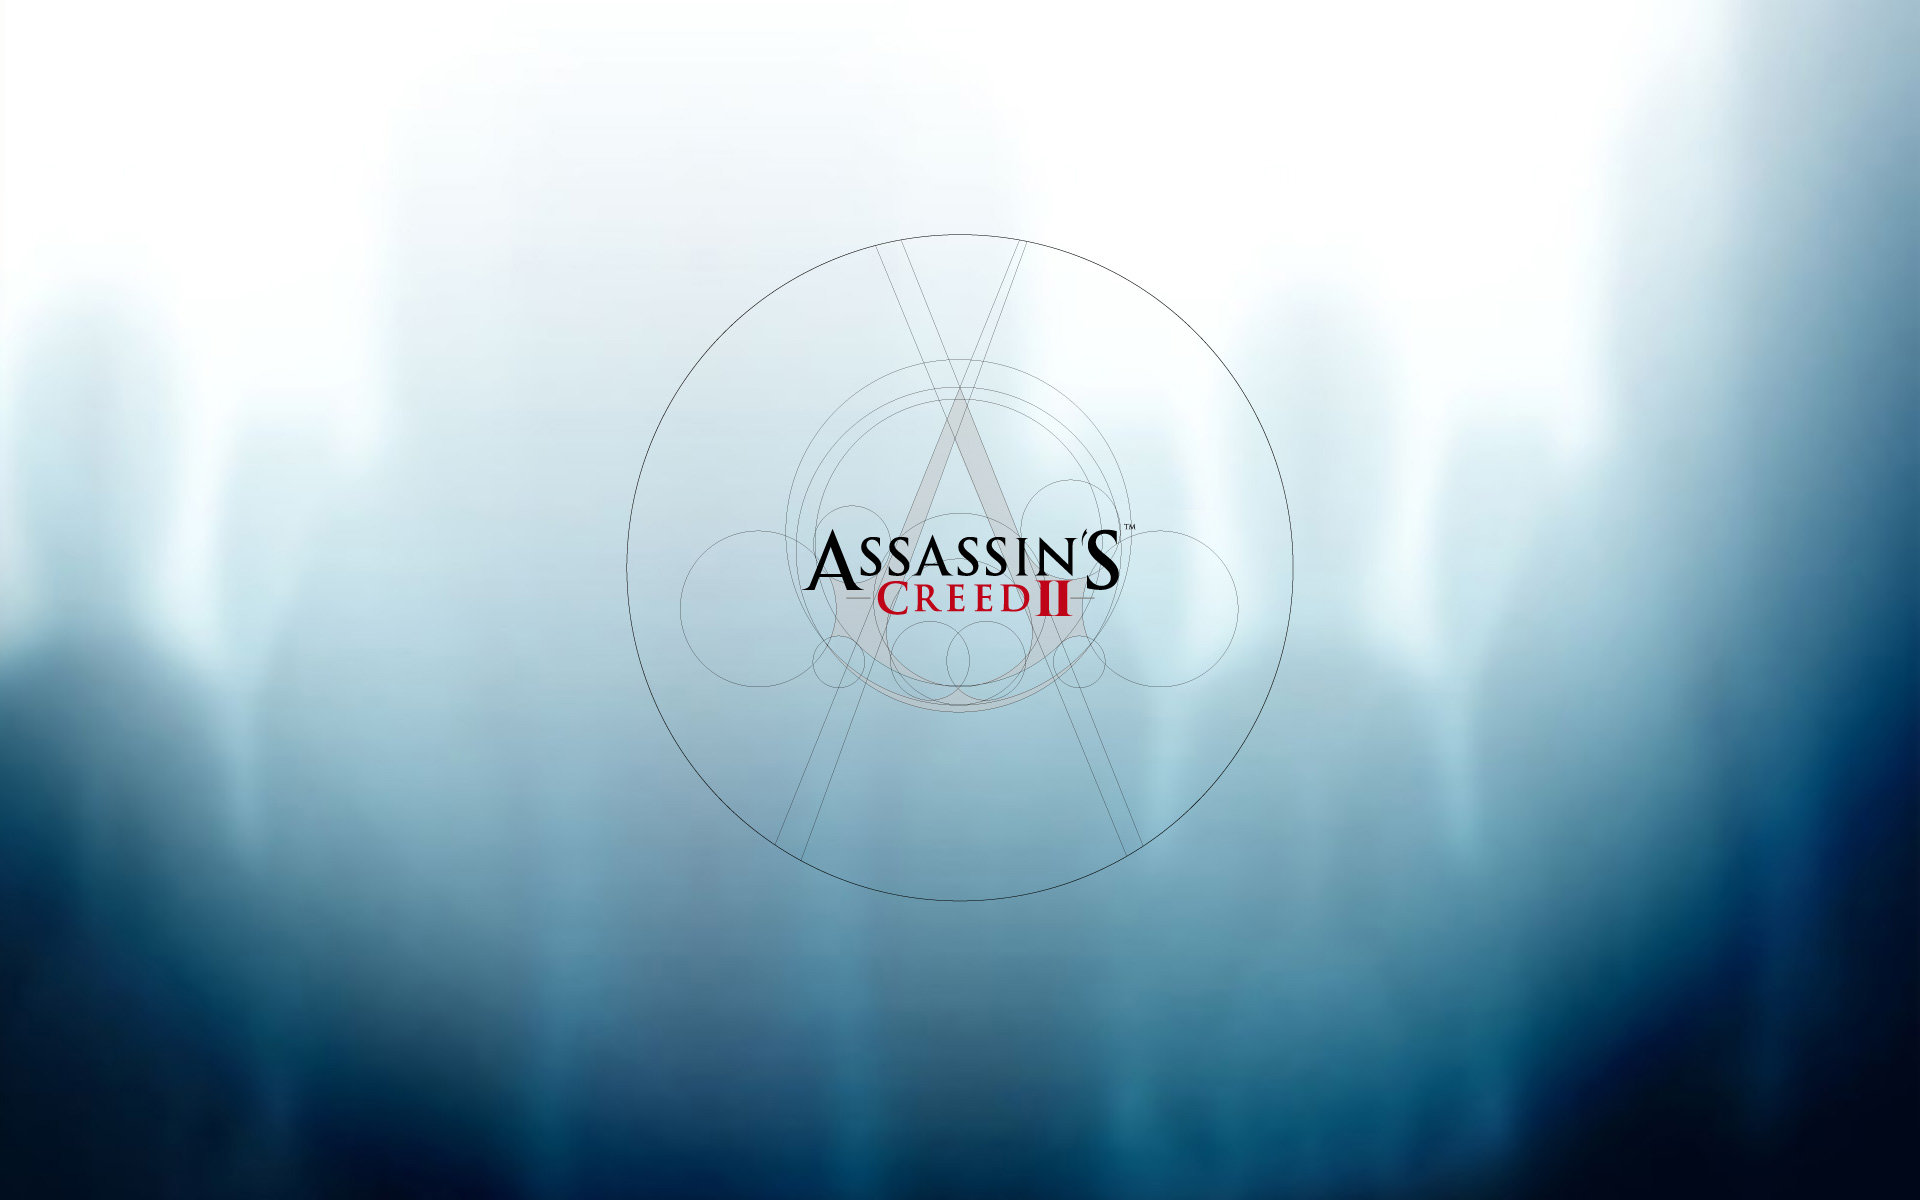 Animus Assassins Creed Wallpaper Top Full HD